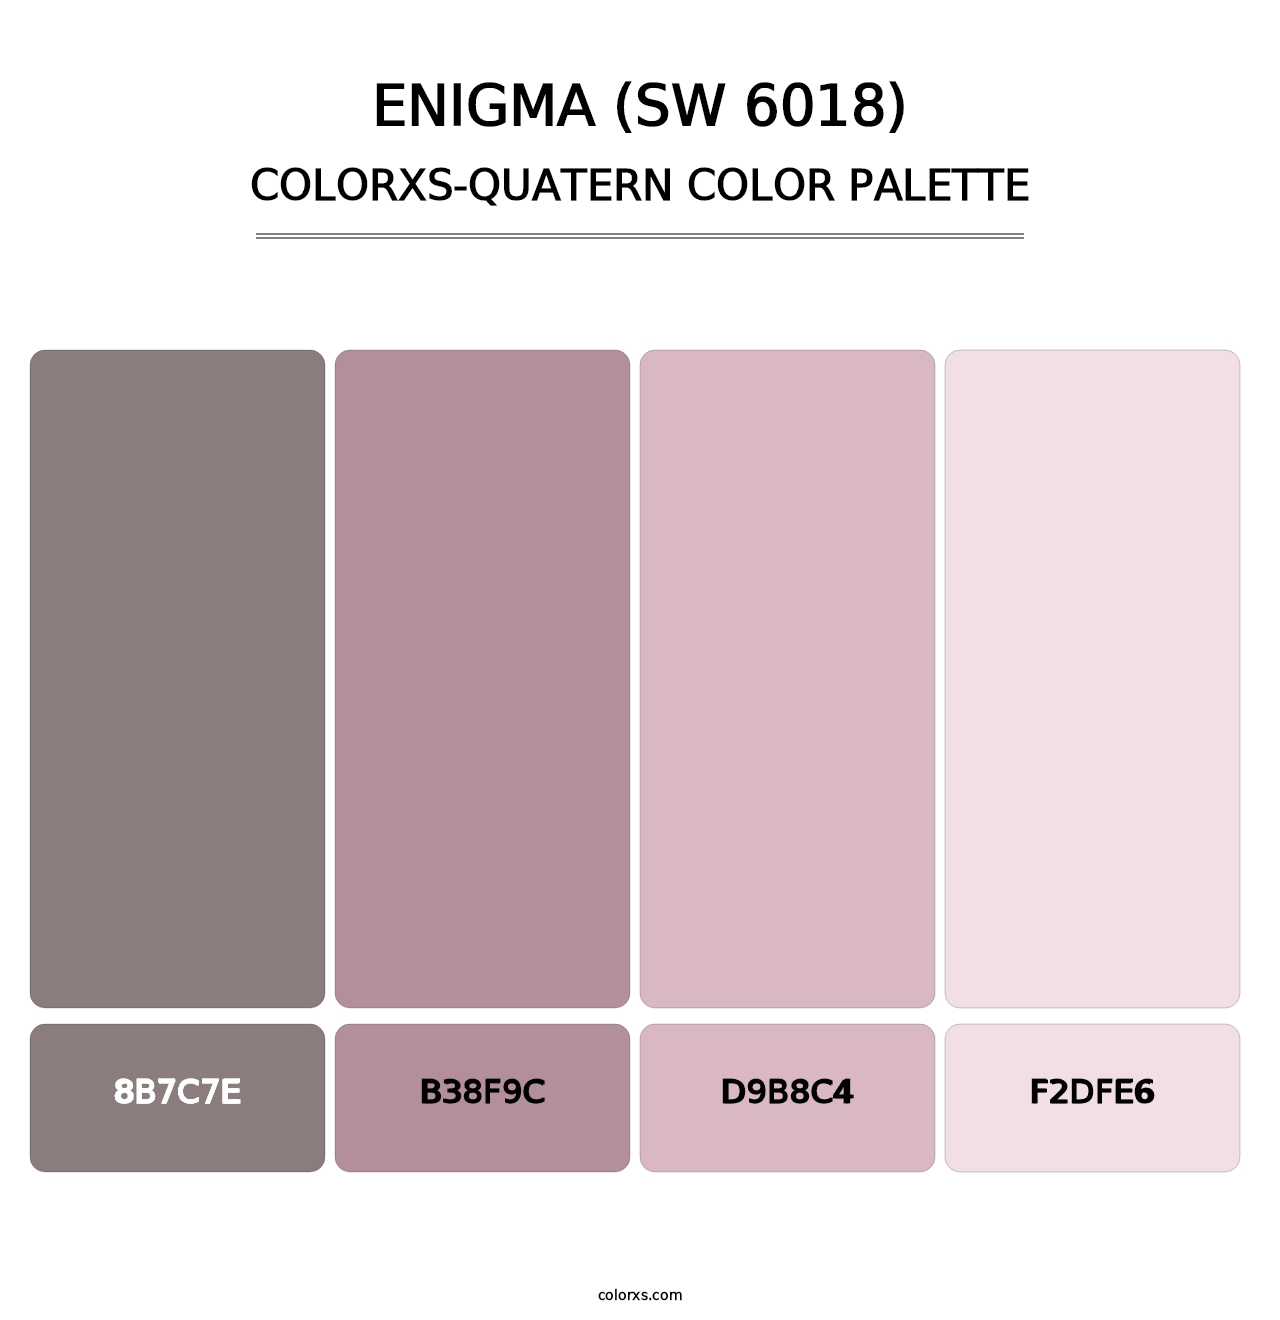 Enigma (SW 6018) - Colorxs Quatern Palette